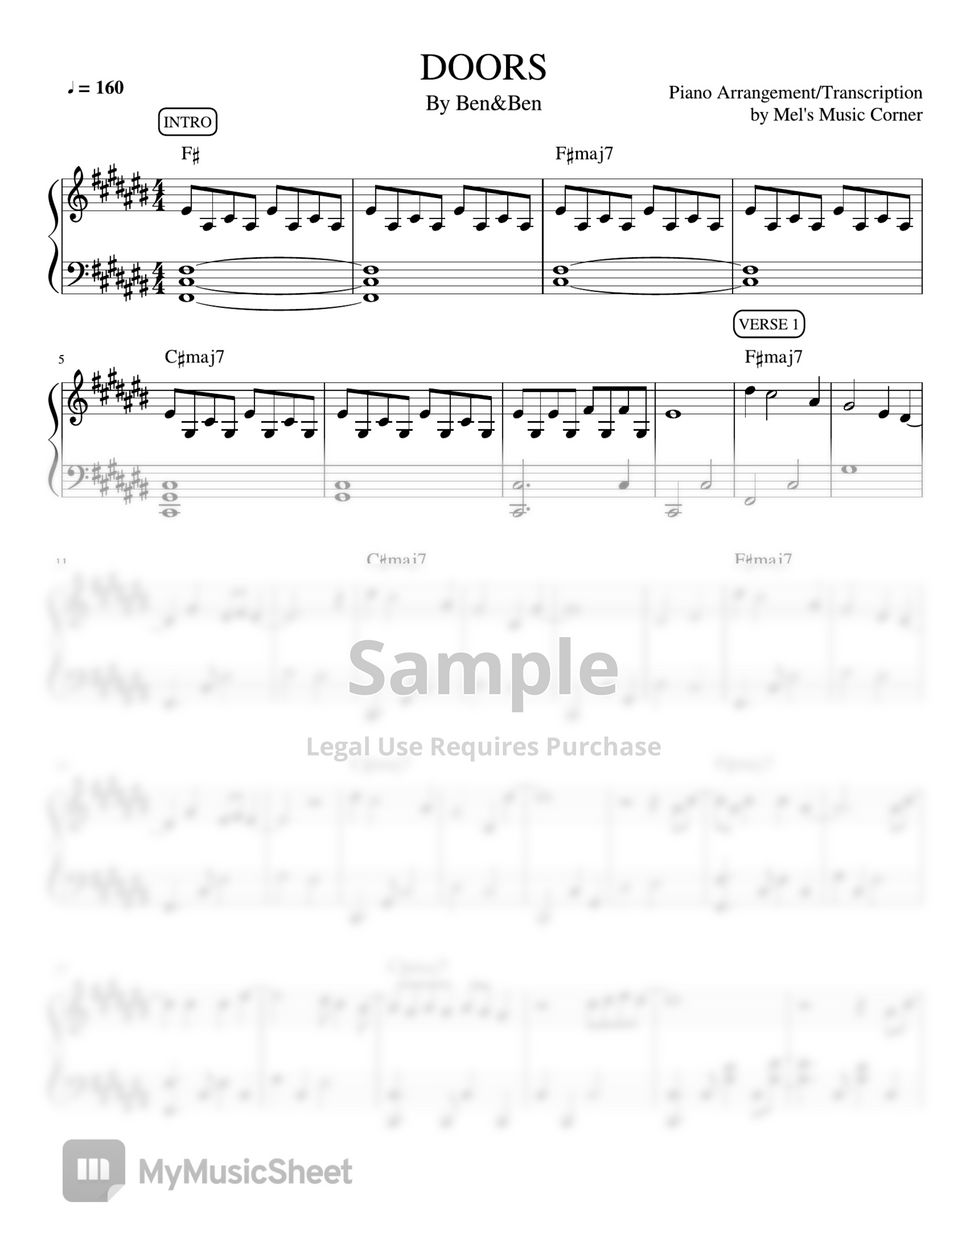 Ben&Ben - Doors (piano sheet music) by Mel's Music Corner